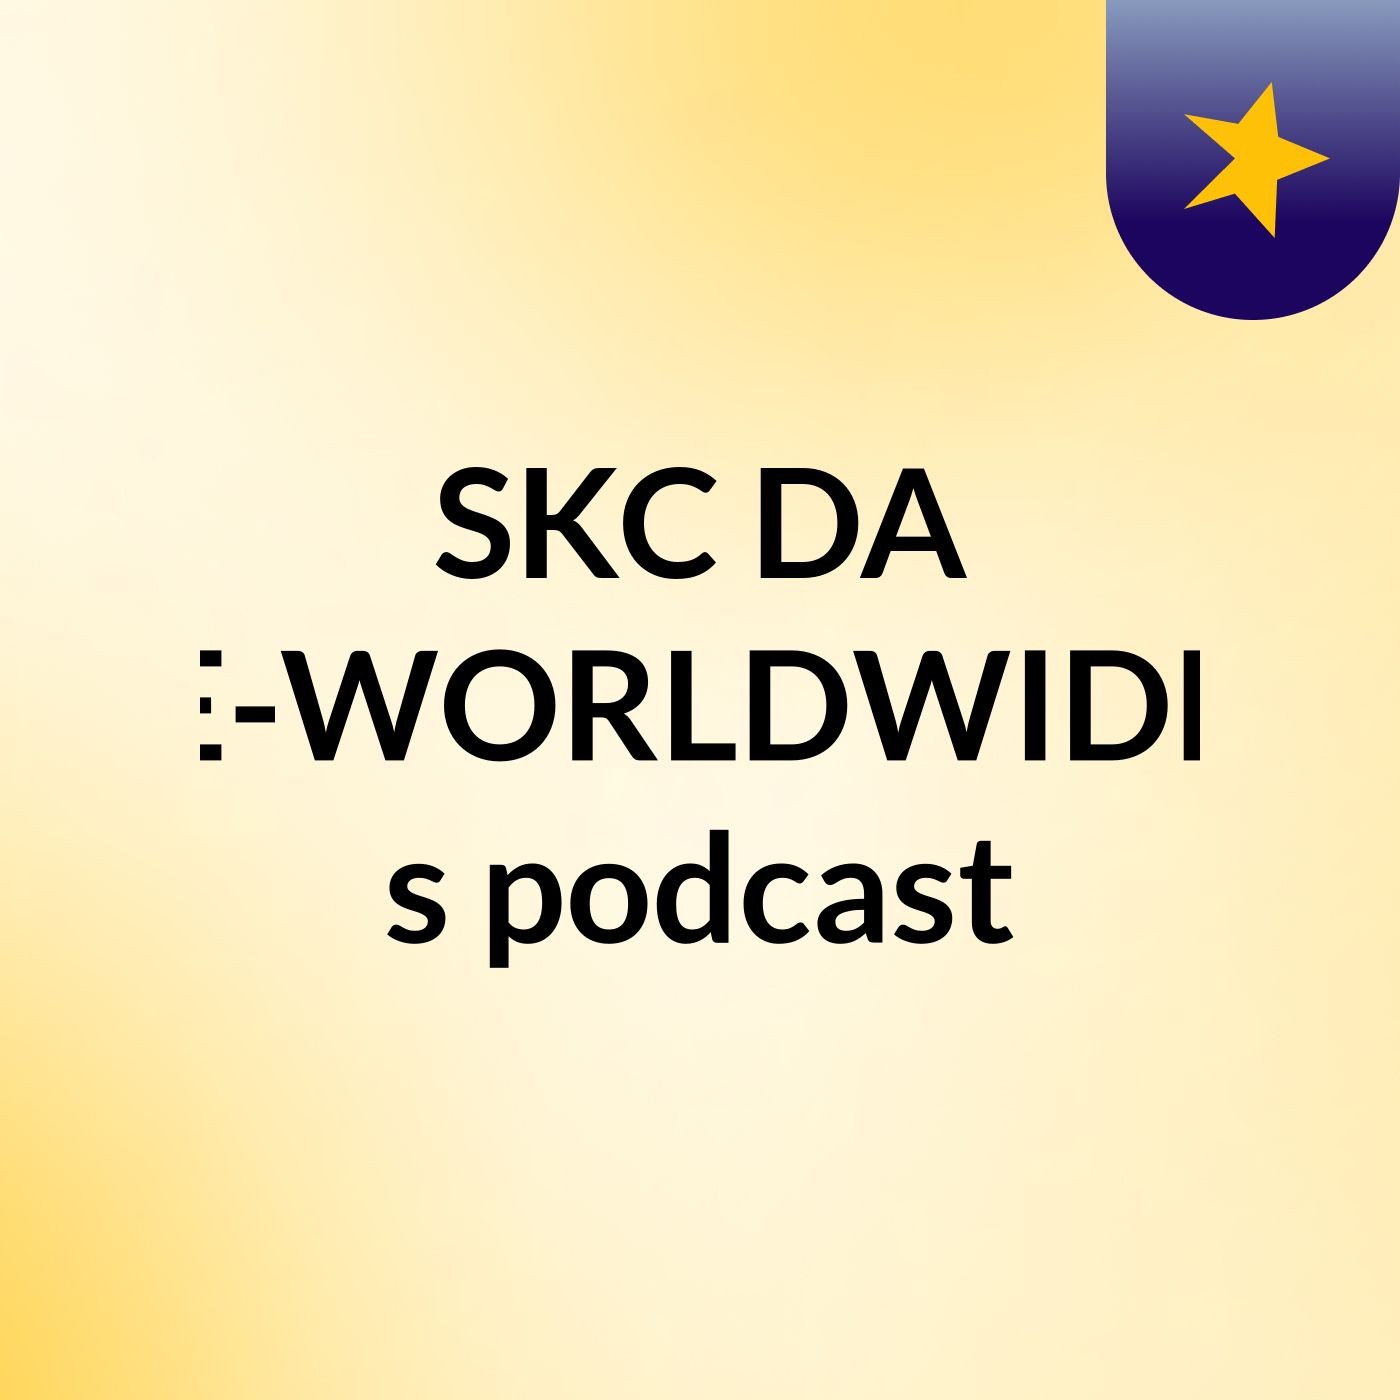 SKC DA E-WORLDWIDE's podcast